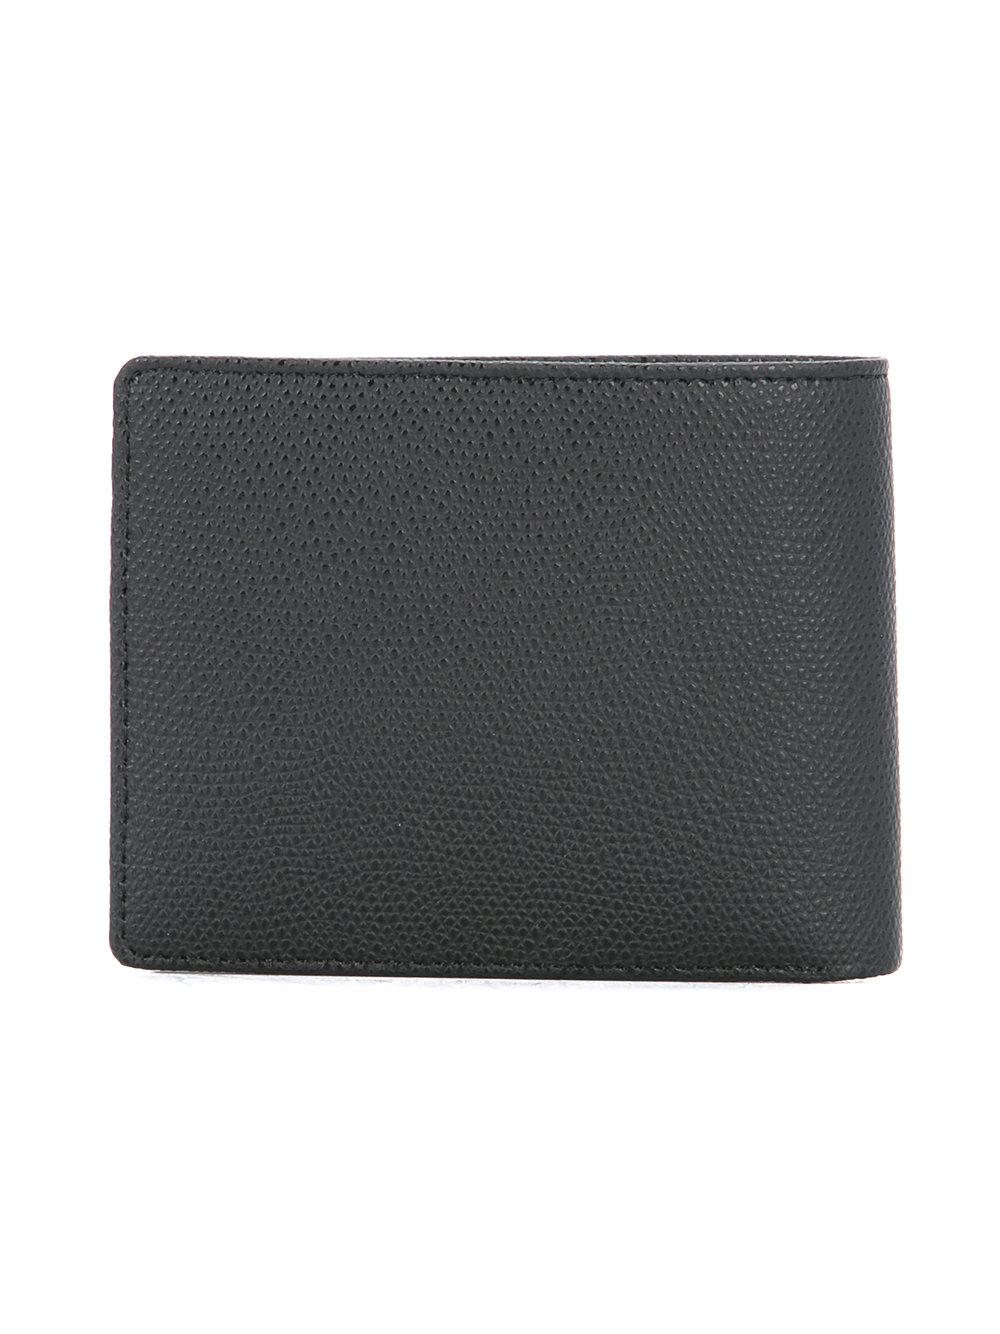 Cerruti 1881 Leather Billfold Wallet in Black for Men - Lyst